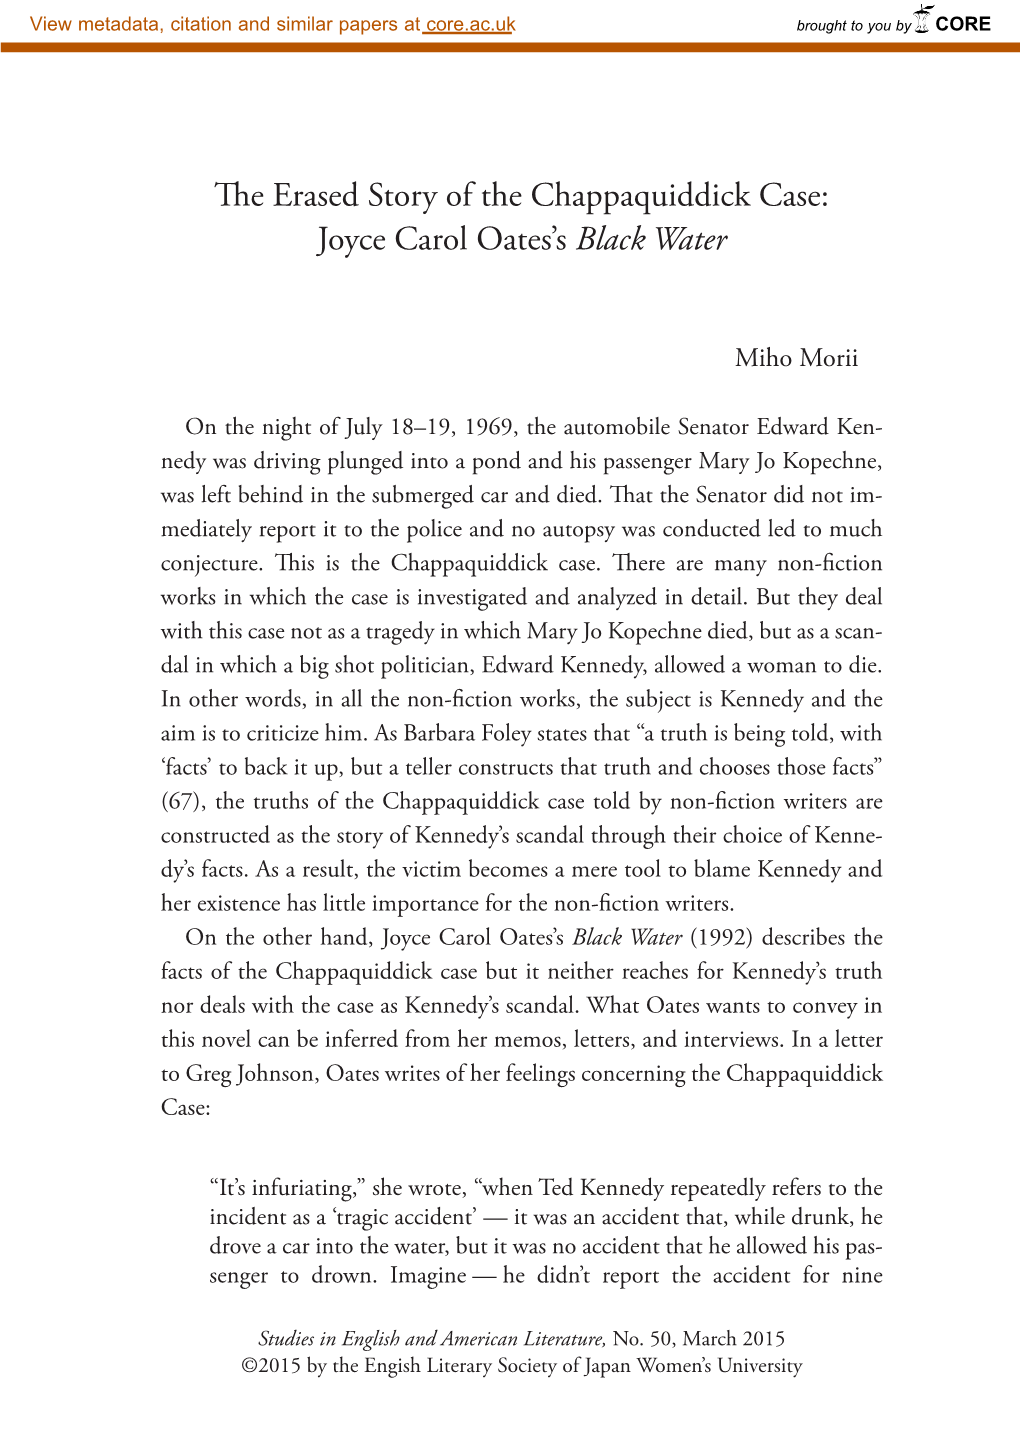 The Erased Story of the Chappaquiddick Case: Joyce Carol Oates's Black Water